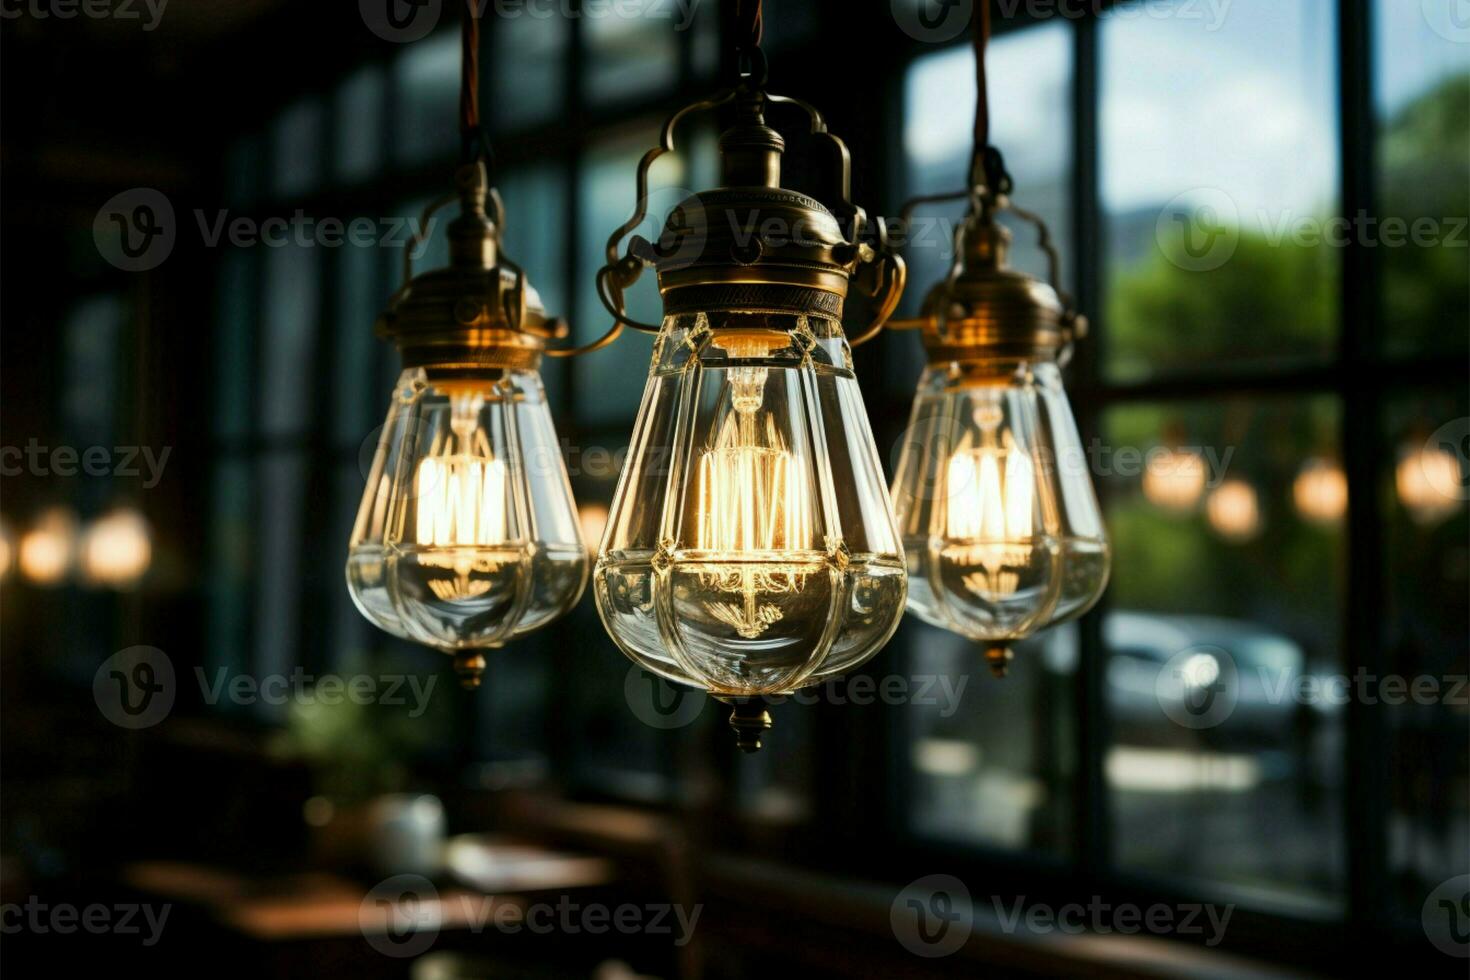 Aesthetic illumination The lamps decor enhances the rooms beauty AI Generated photo